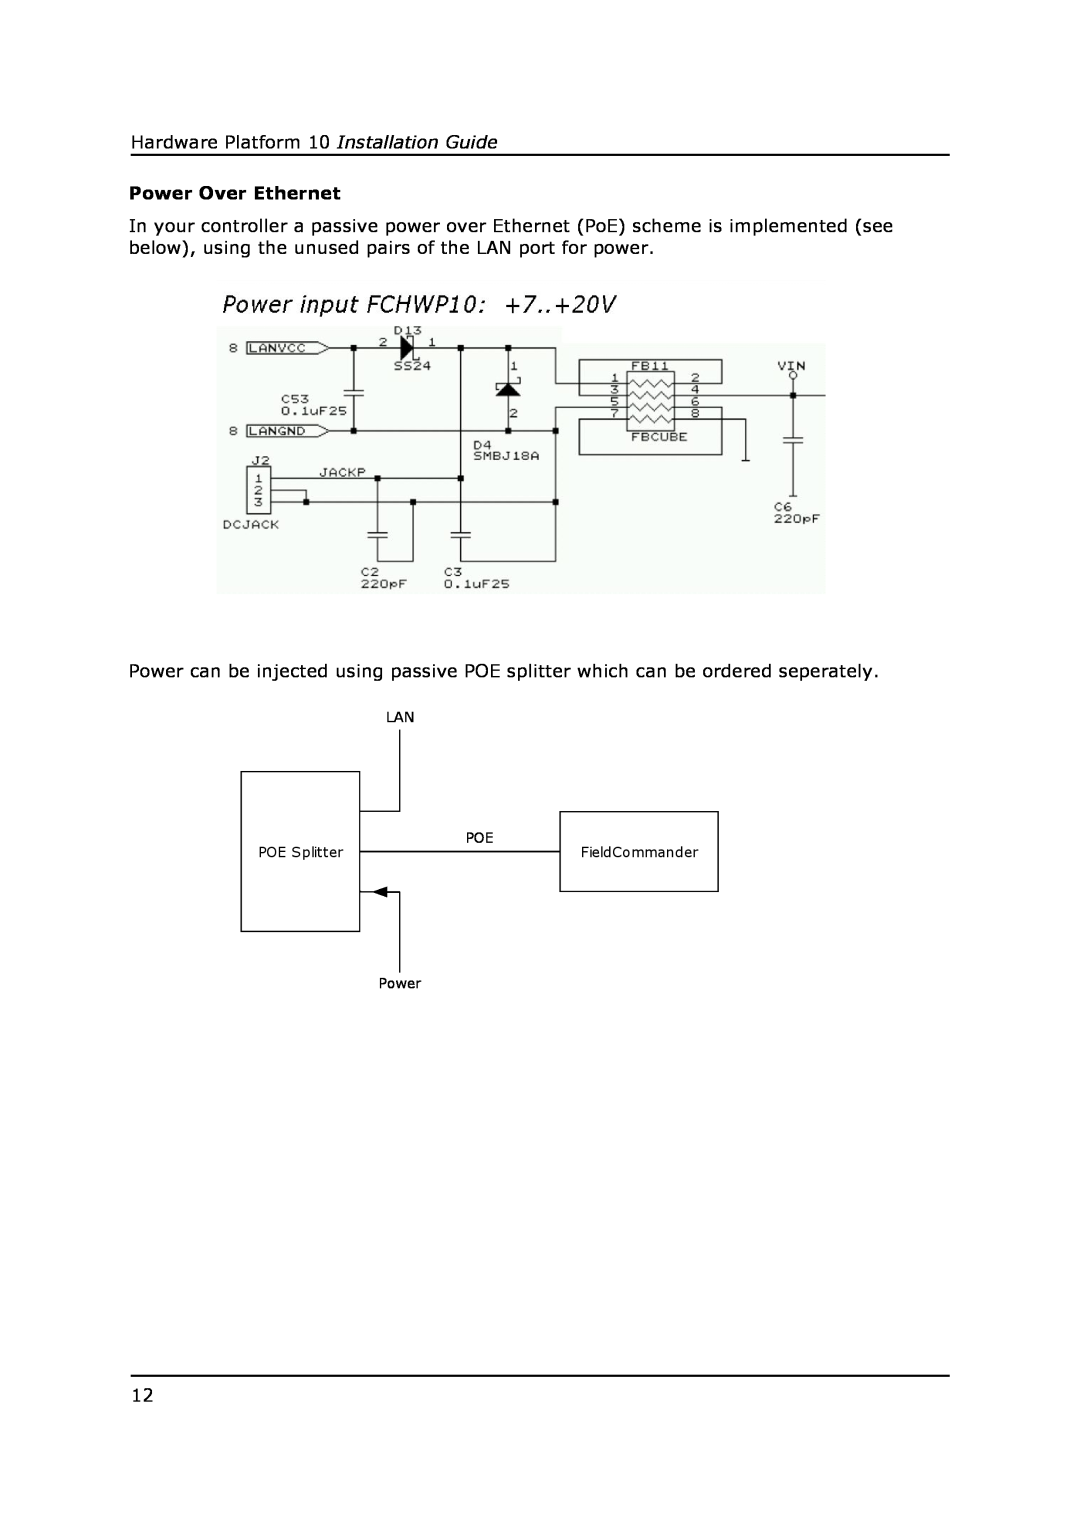 Field Controls manual Hardware Platform 10 Installation Guide Power Over Ethernet 